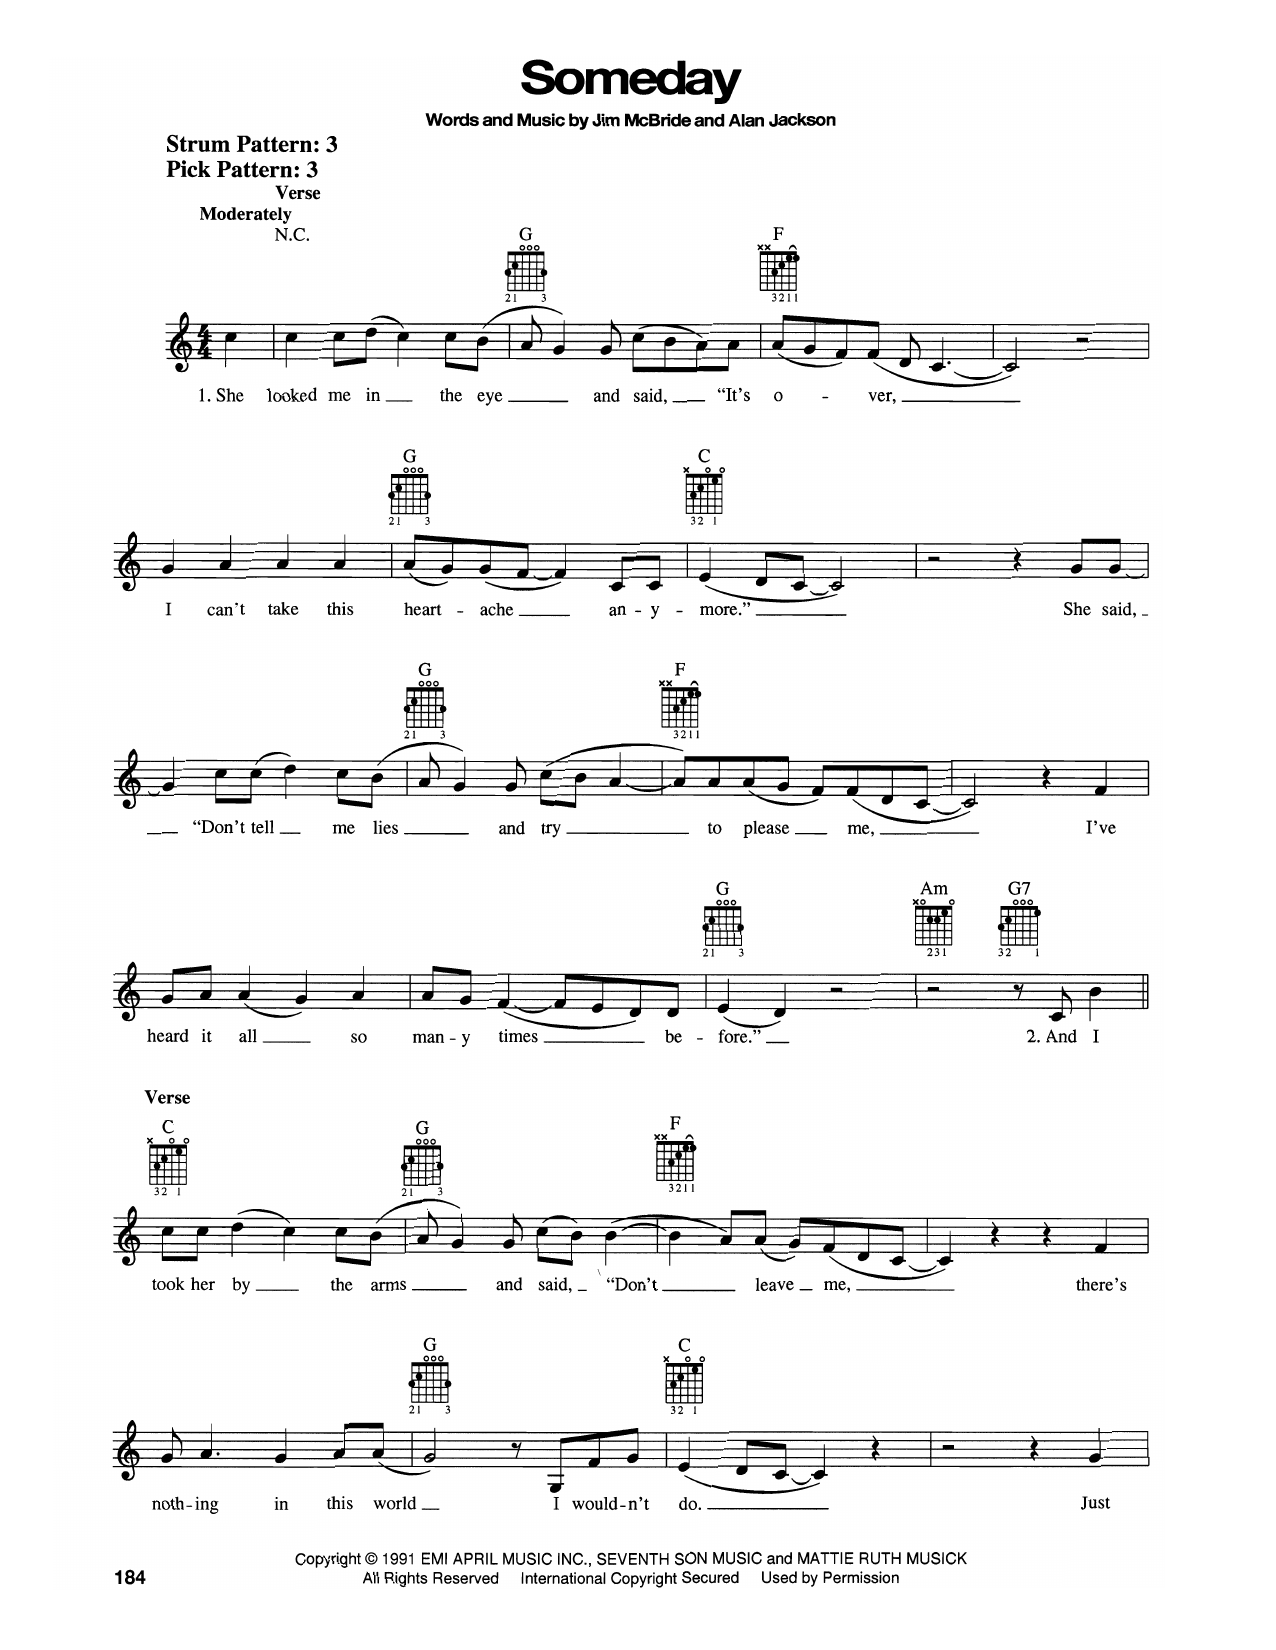 Alan Jackson Someday Sheet Music Notes & Chords for Easy Guitar - Download or Print PDF